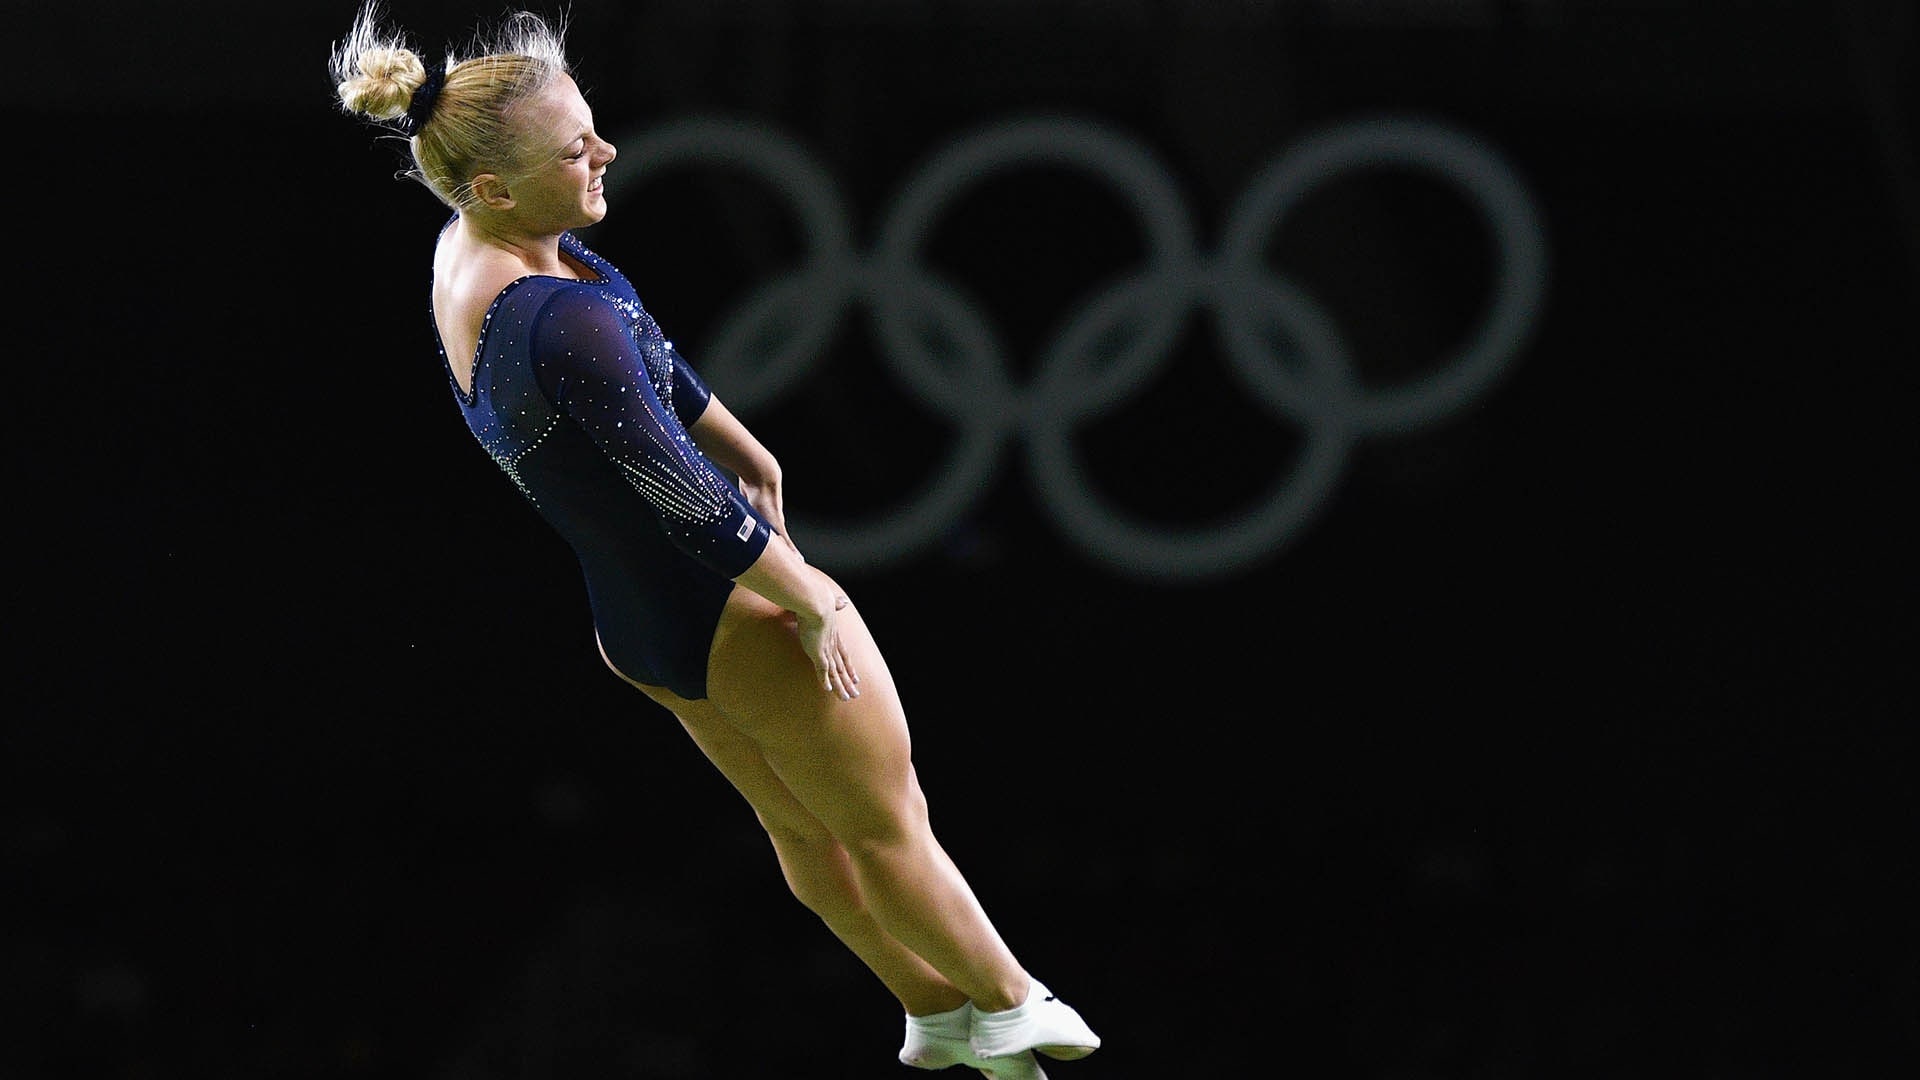 Trampoline gymnastics: Nicole Ahsinger, The 2018 Pan American Gymnastics Championships gold medalist. 1920x1080 Full HD Wallpaper.